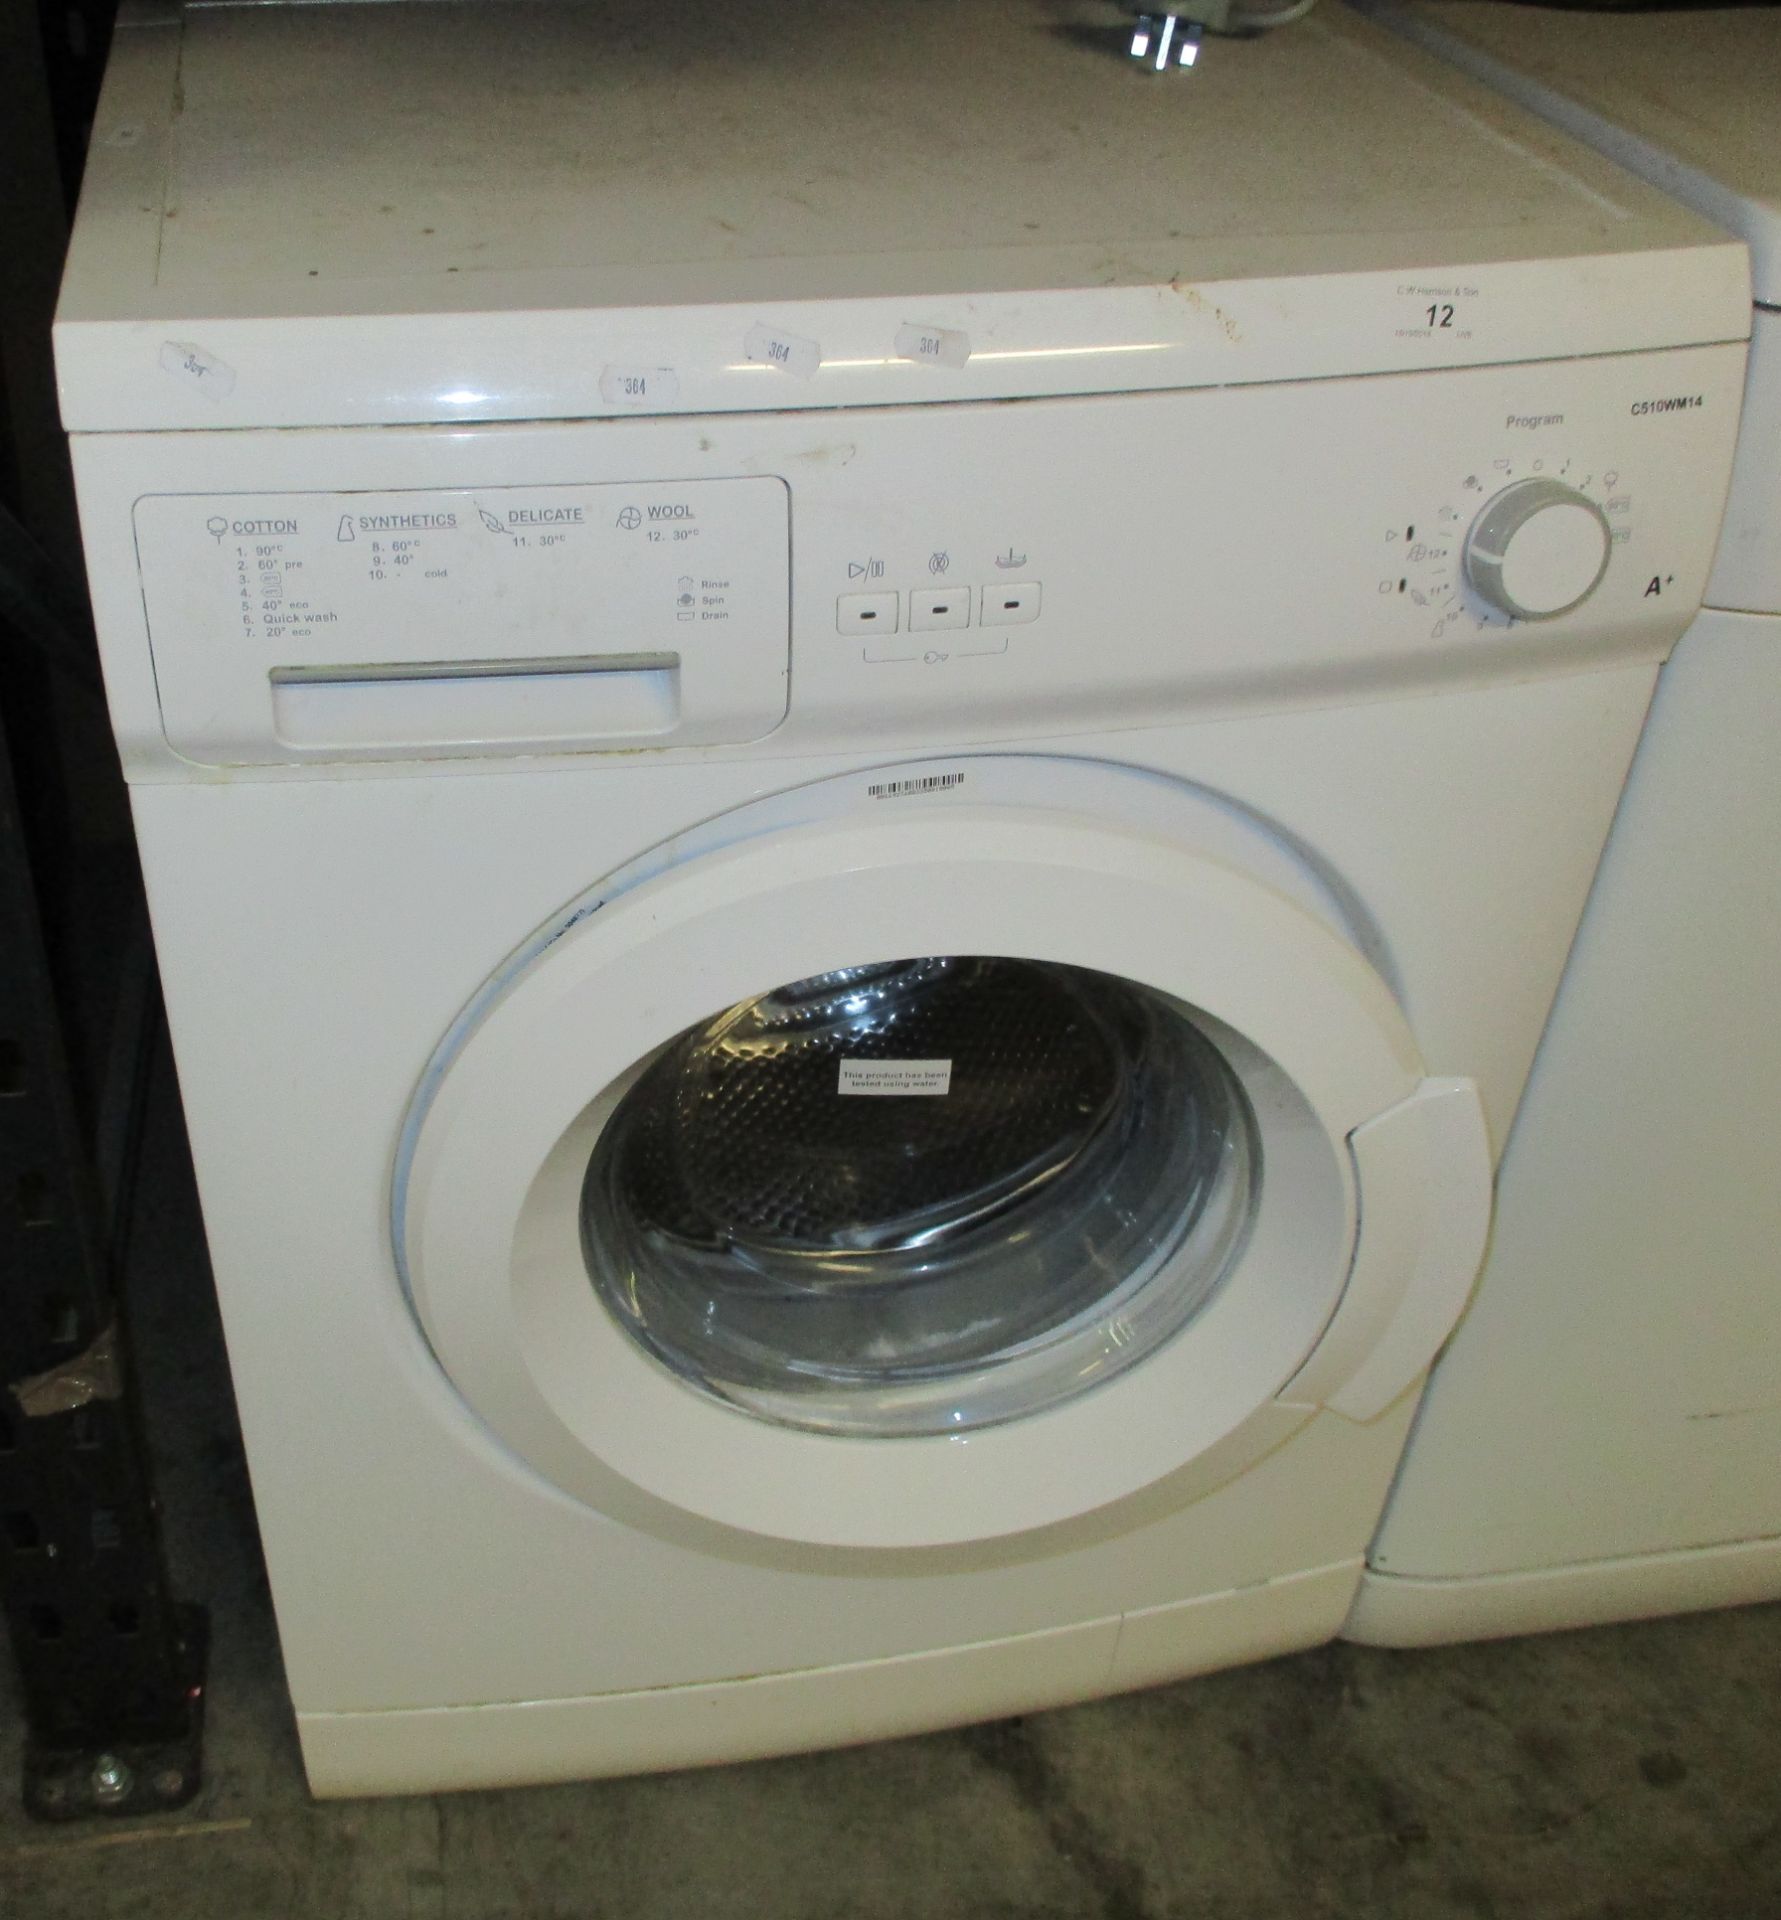 A C510WM14 automatic washing machine supplied by DSG Retail Ltd